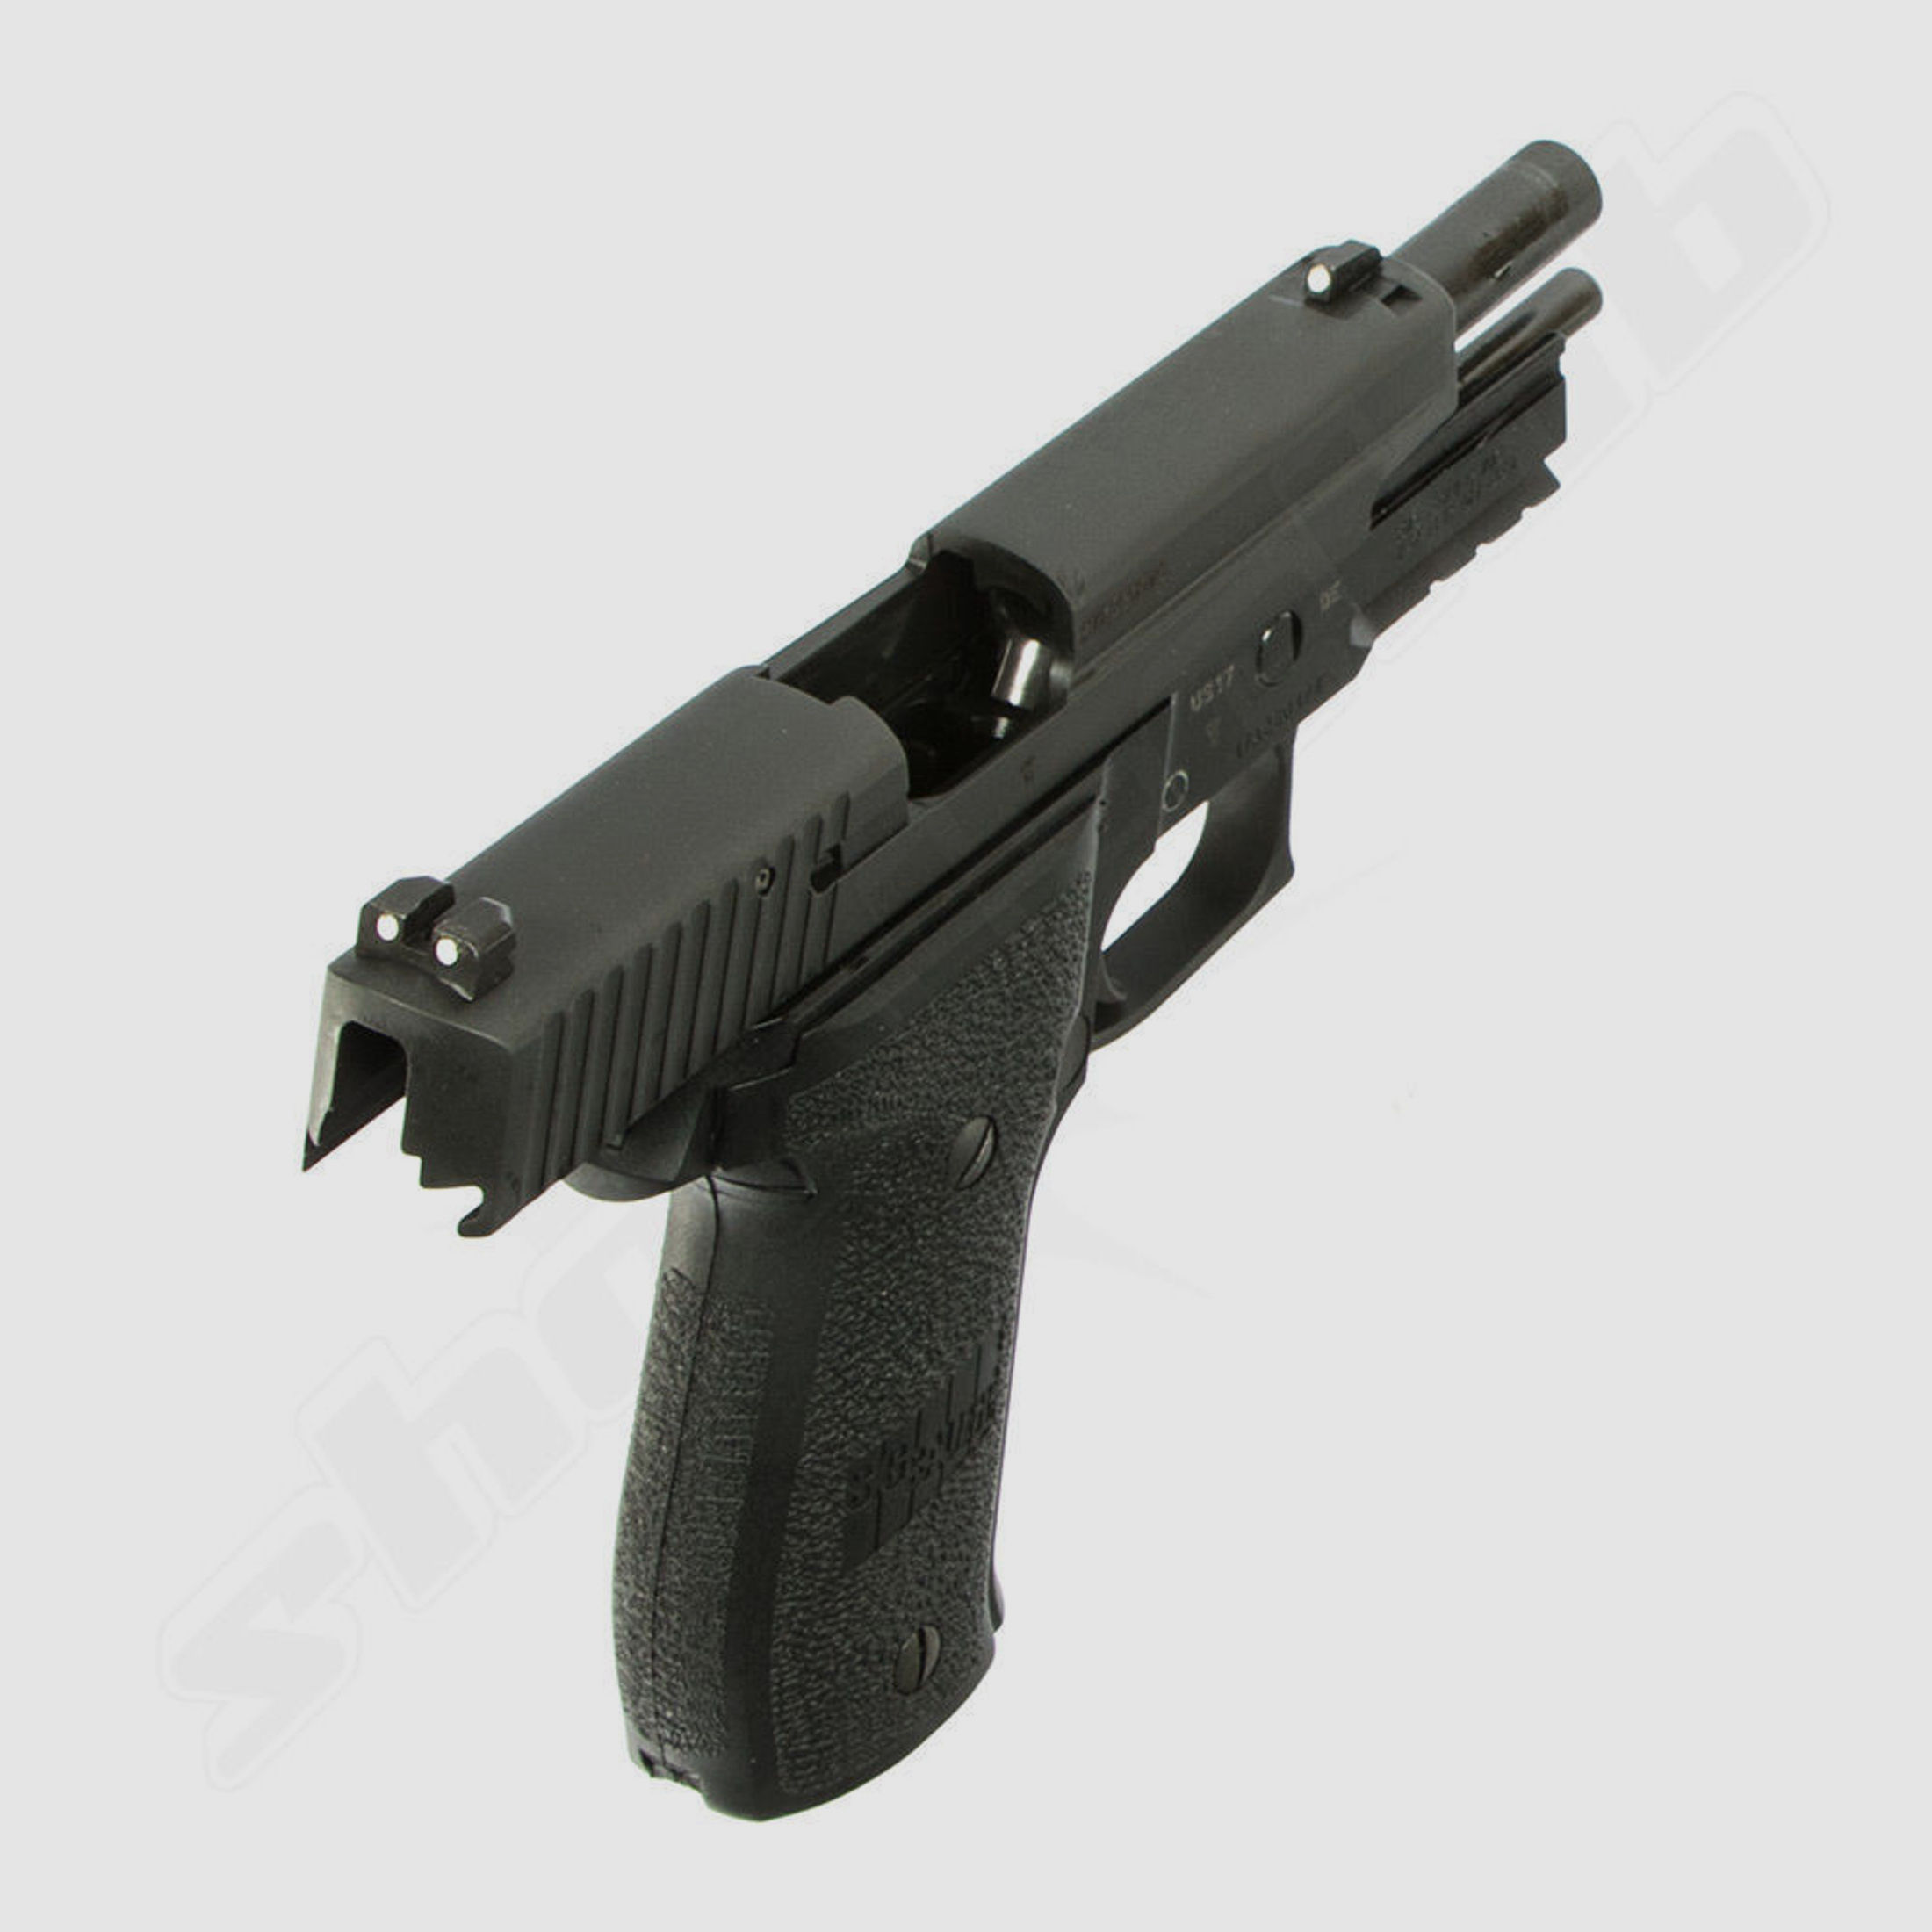 Sig Sauer P226 MK25 im Kaliber 9mm Luger